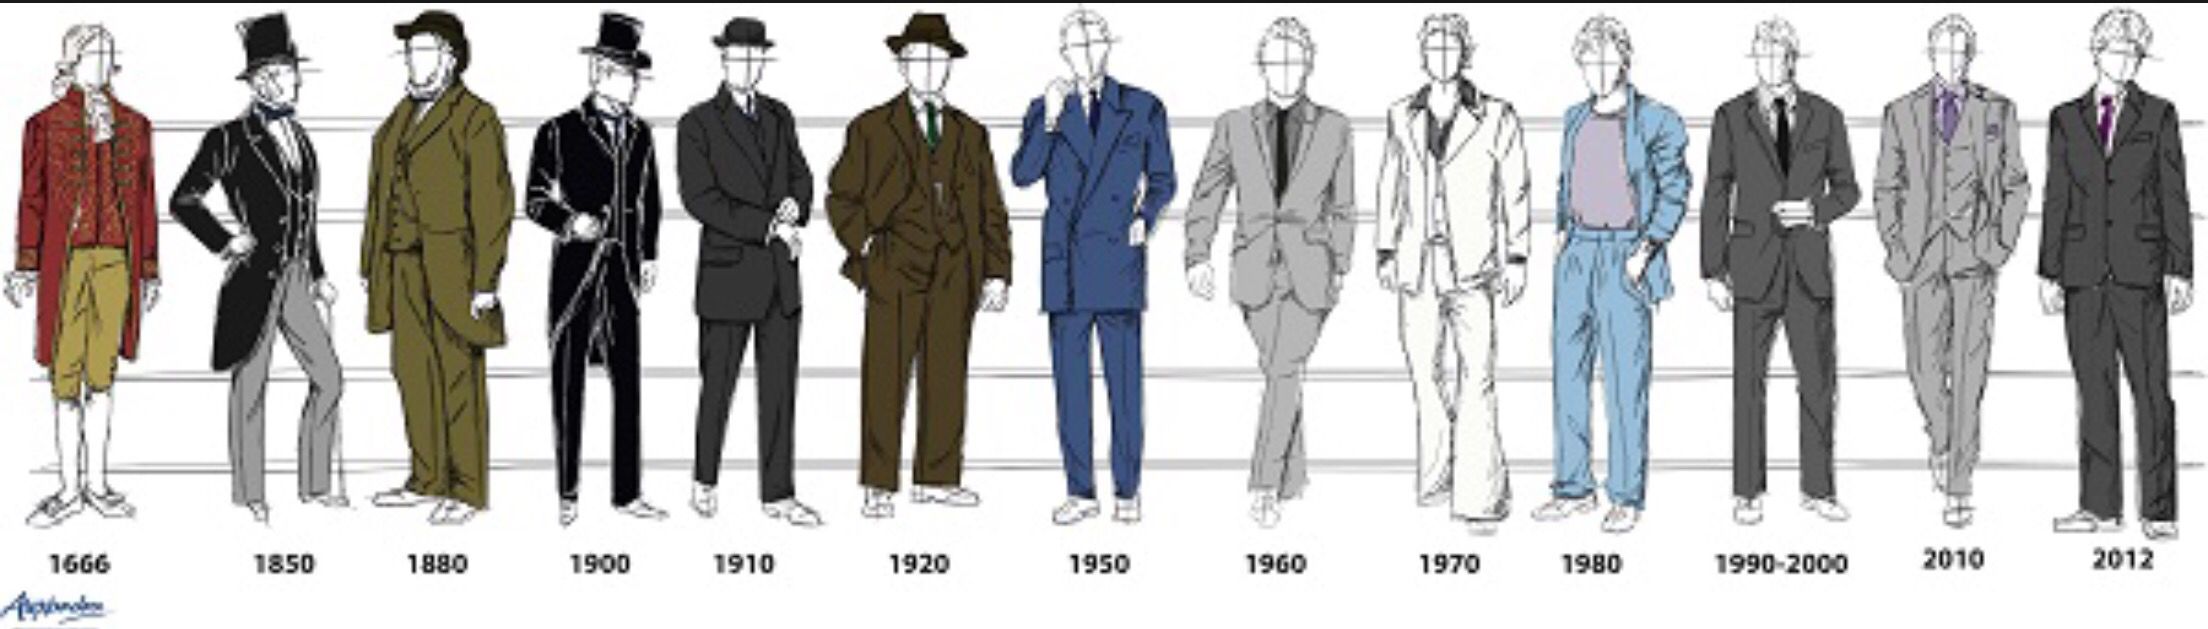 Эволюция мужской моды 19 века